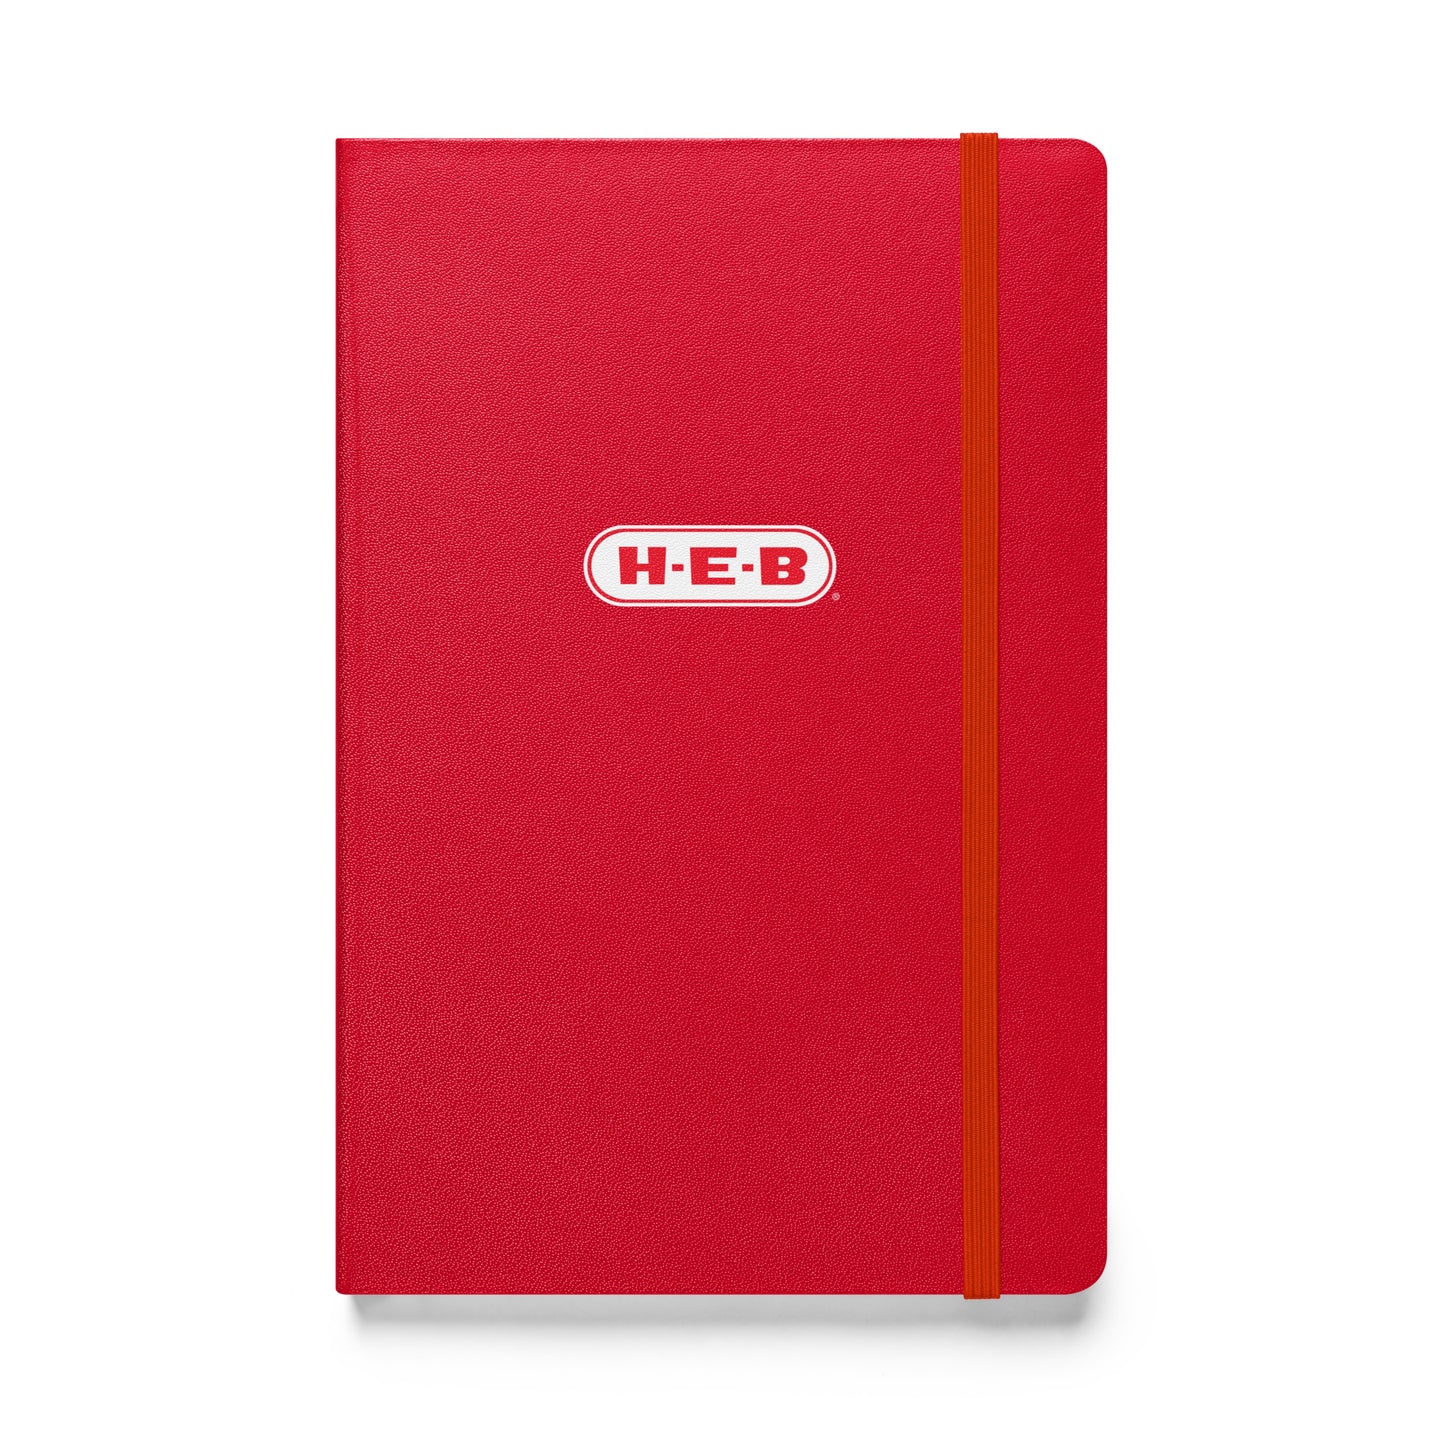 HEB Hardcover bound notebook CedarHill Country Market